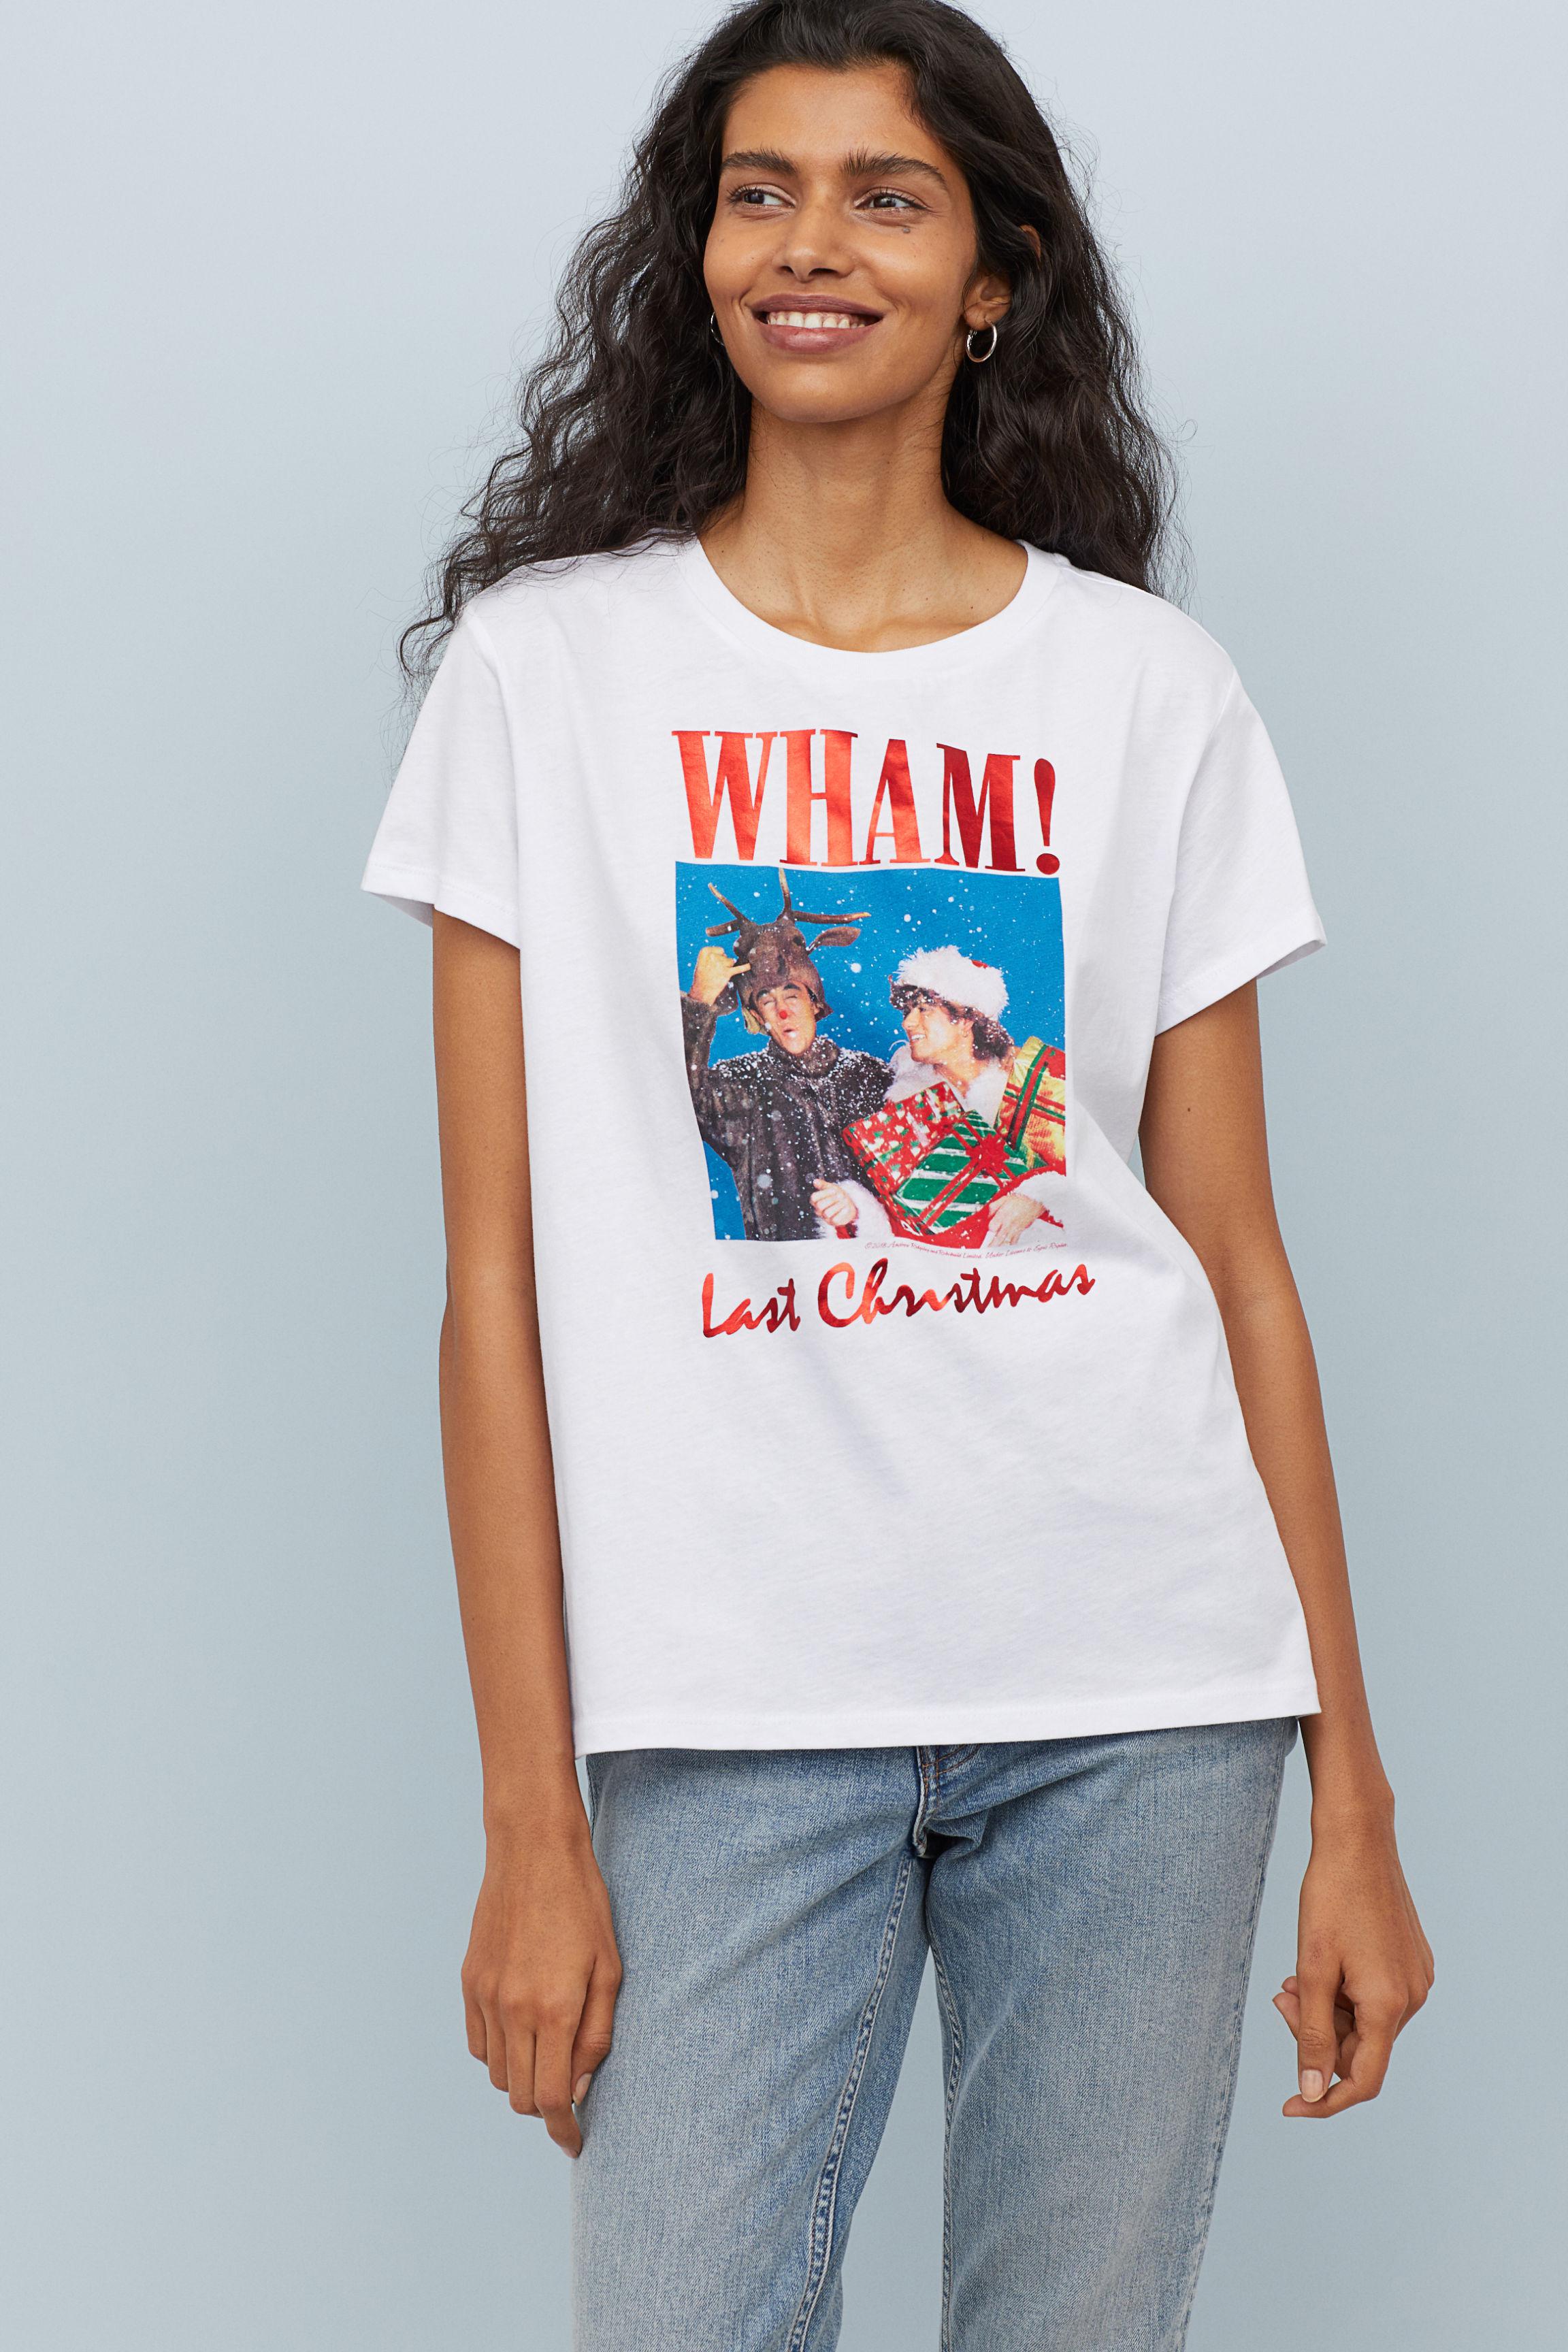 t shirt wham last christmas, huge deal Hit A 90% Discount -  www.globusjourneys.in